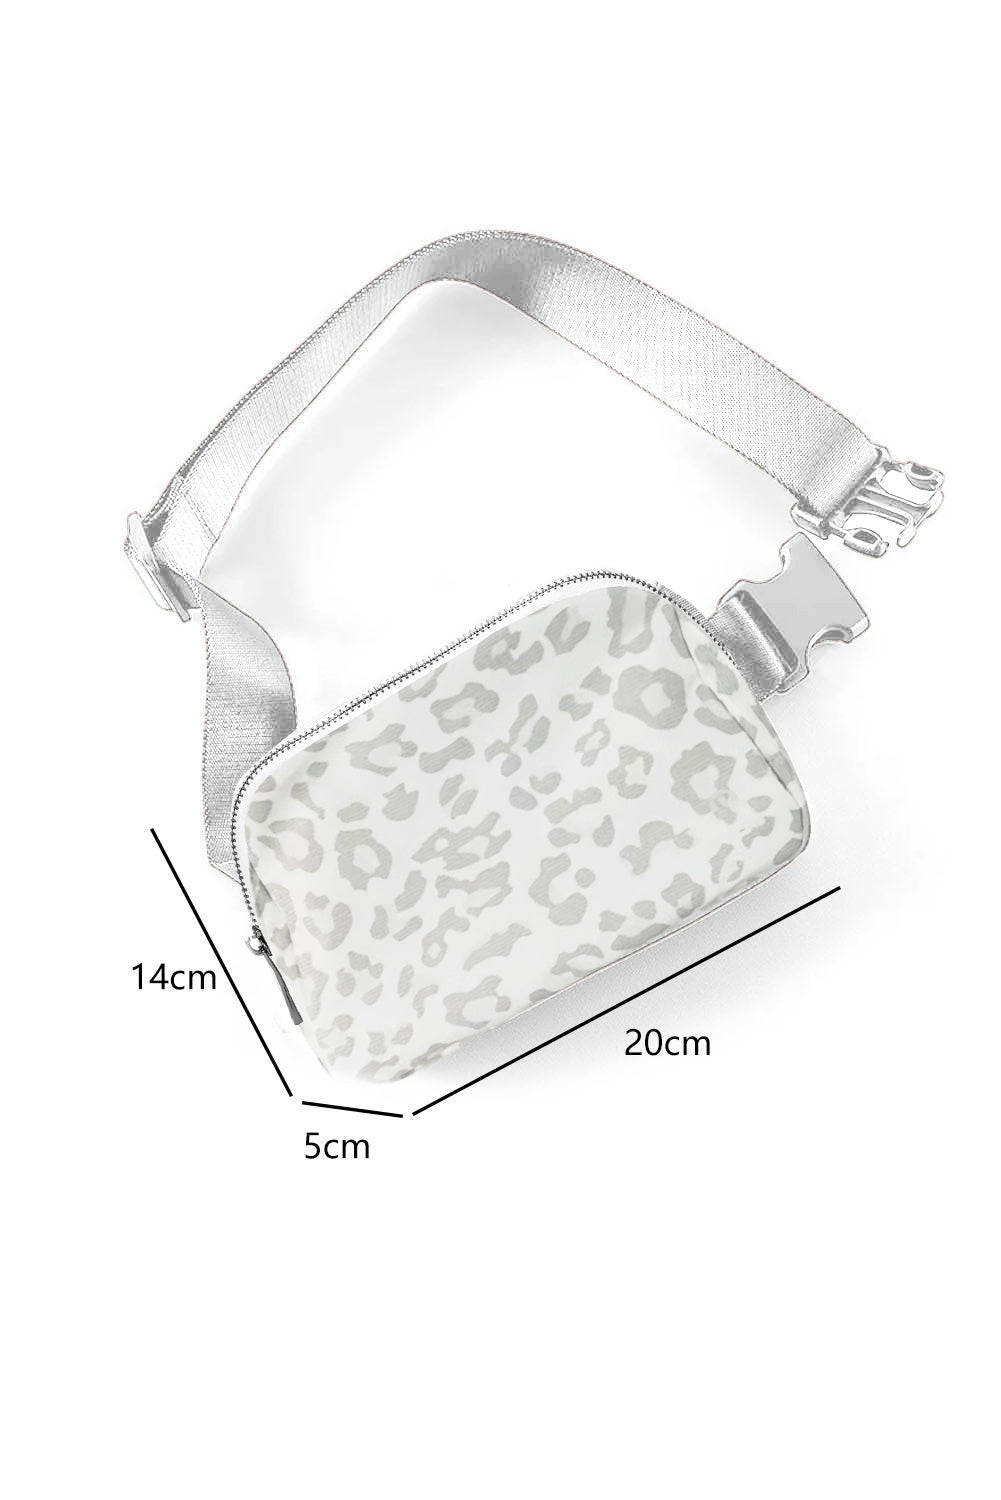 White Leopard Print Buckle Canvas Crossbody Bag - Secure Zipper Closure